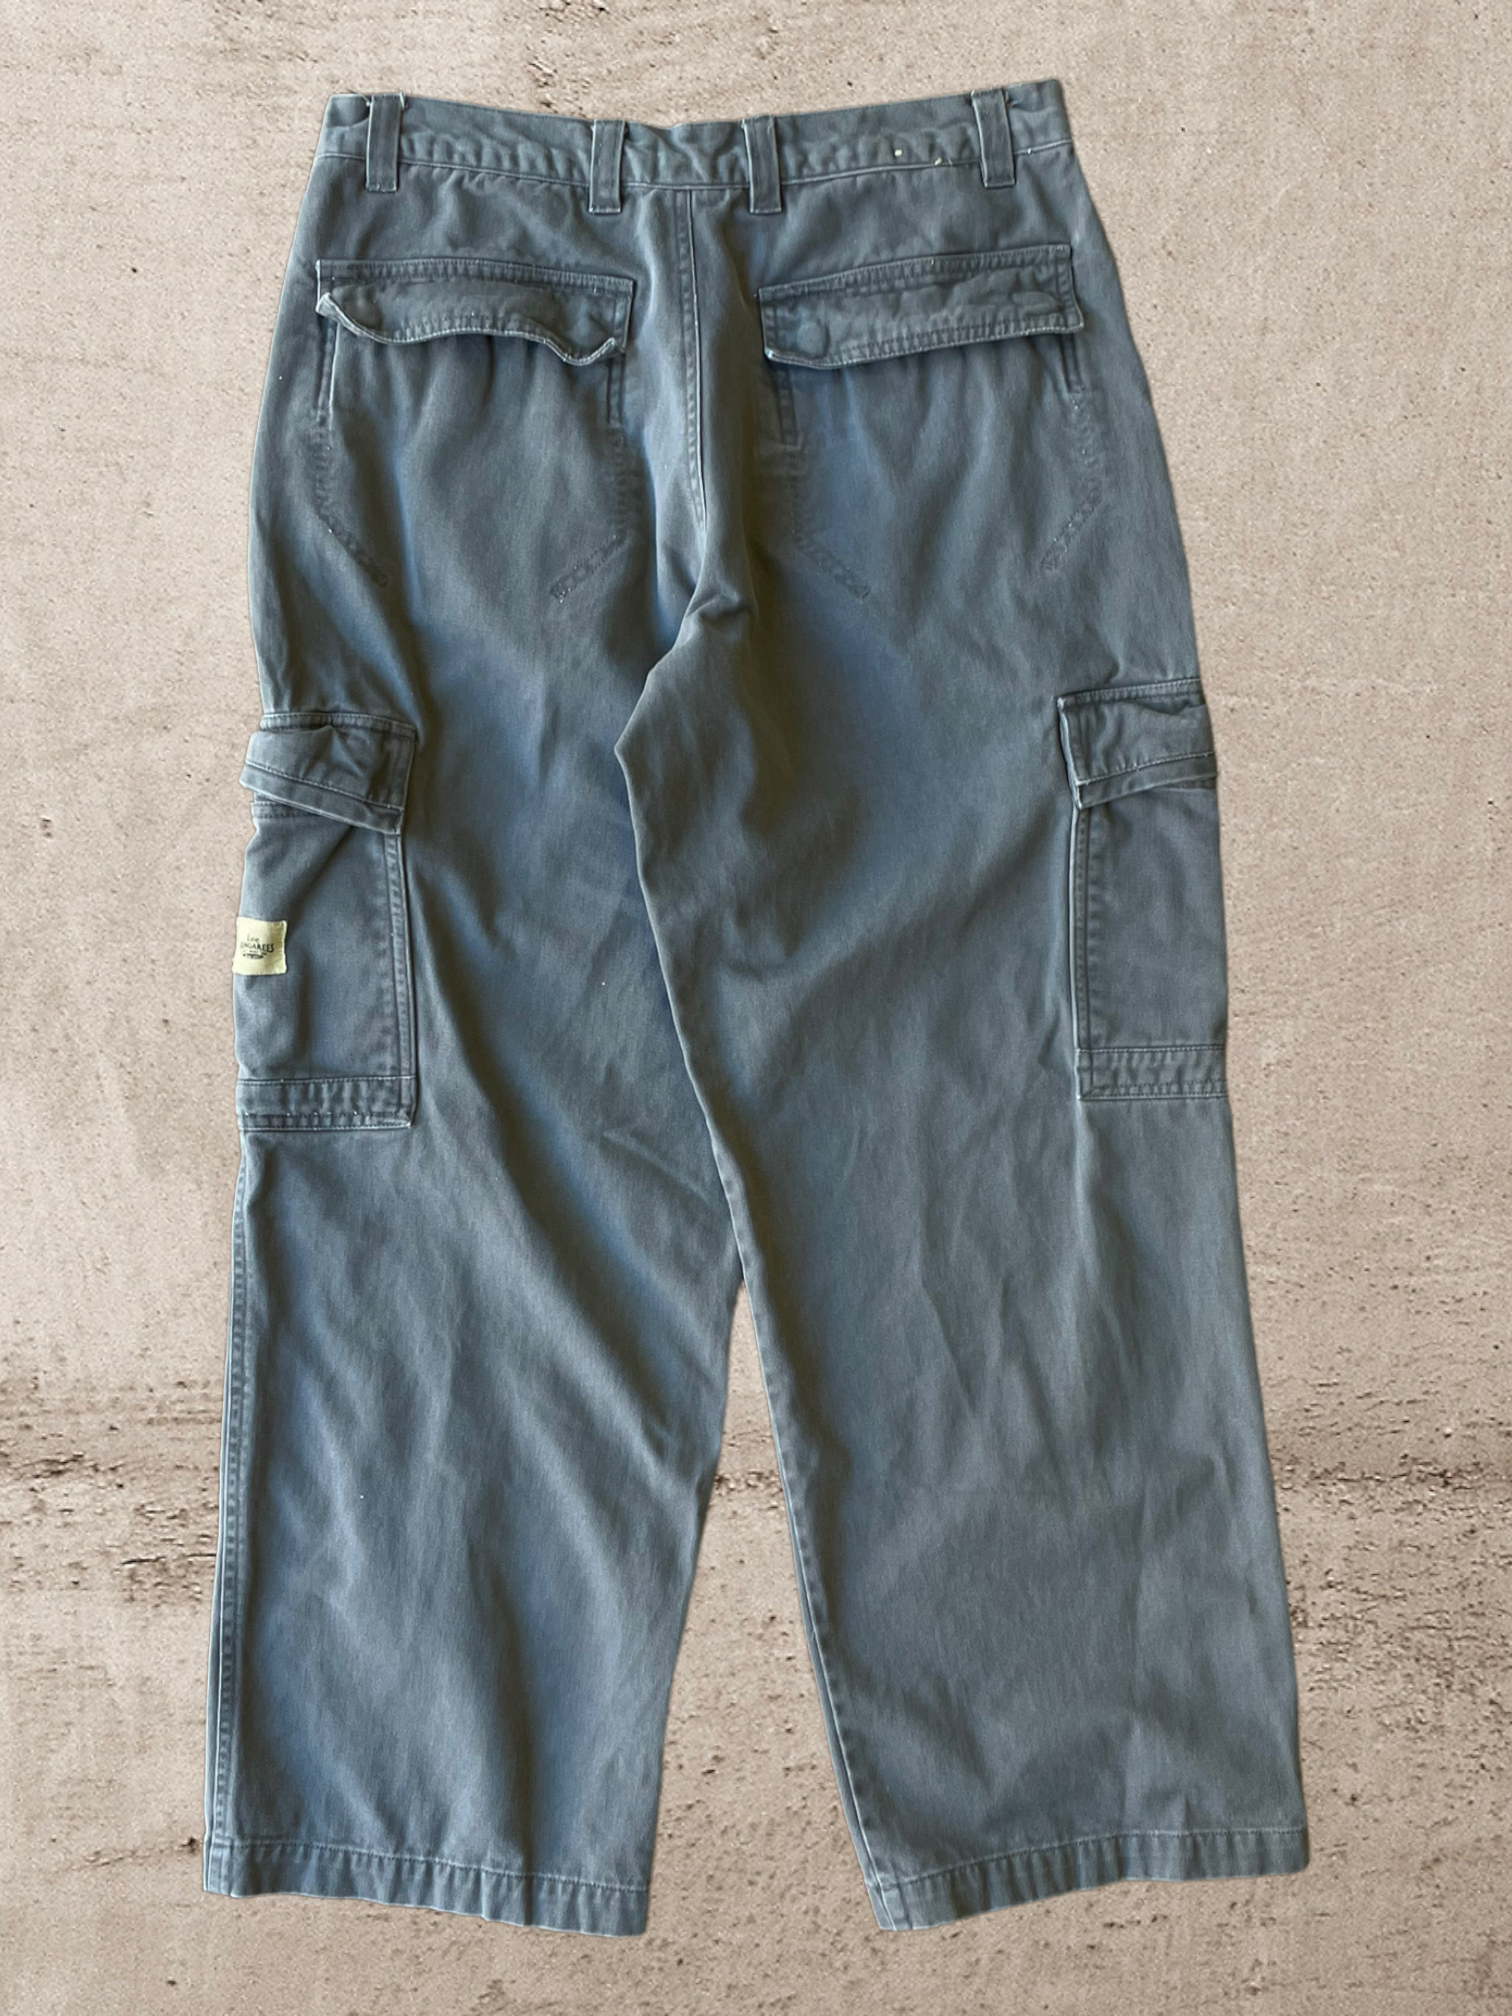 Vintage Lee Dungarees Cargo Pants - 32x30